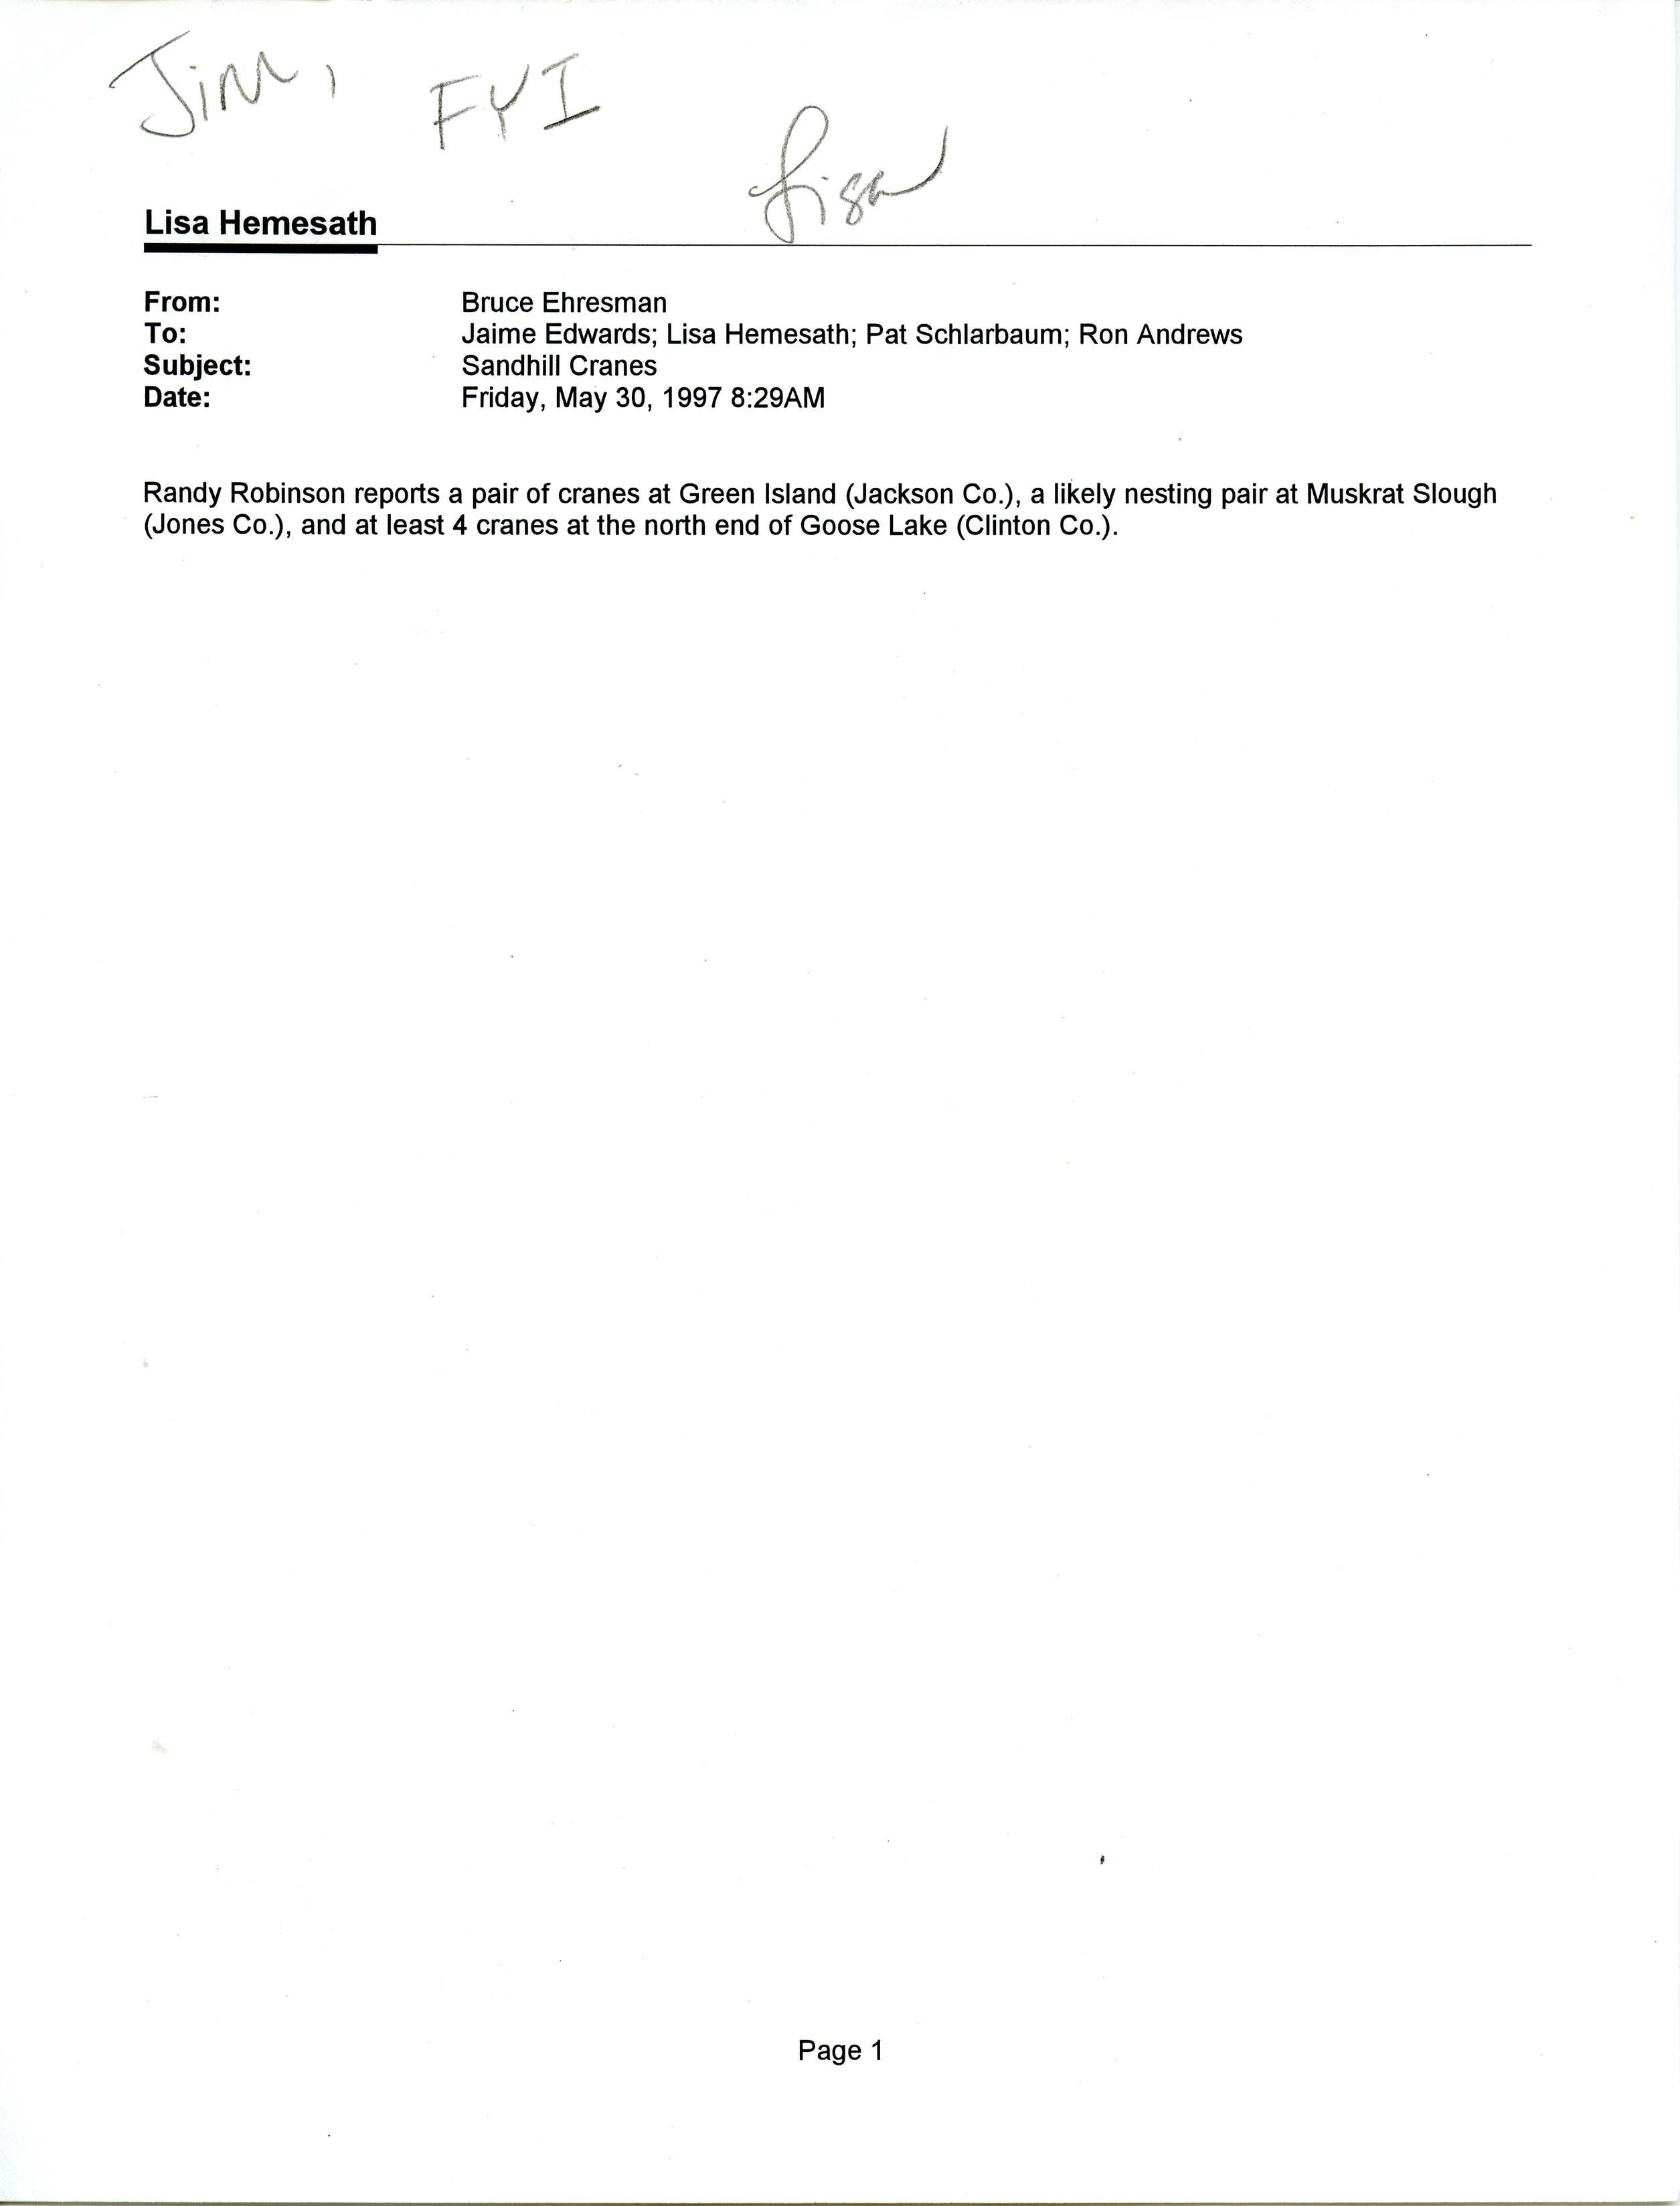 Bruce Ehresman email to Lisa Hemesath and others regarding Sandhill Crane sightings, May 30, 1997